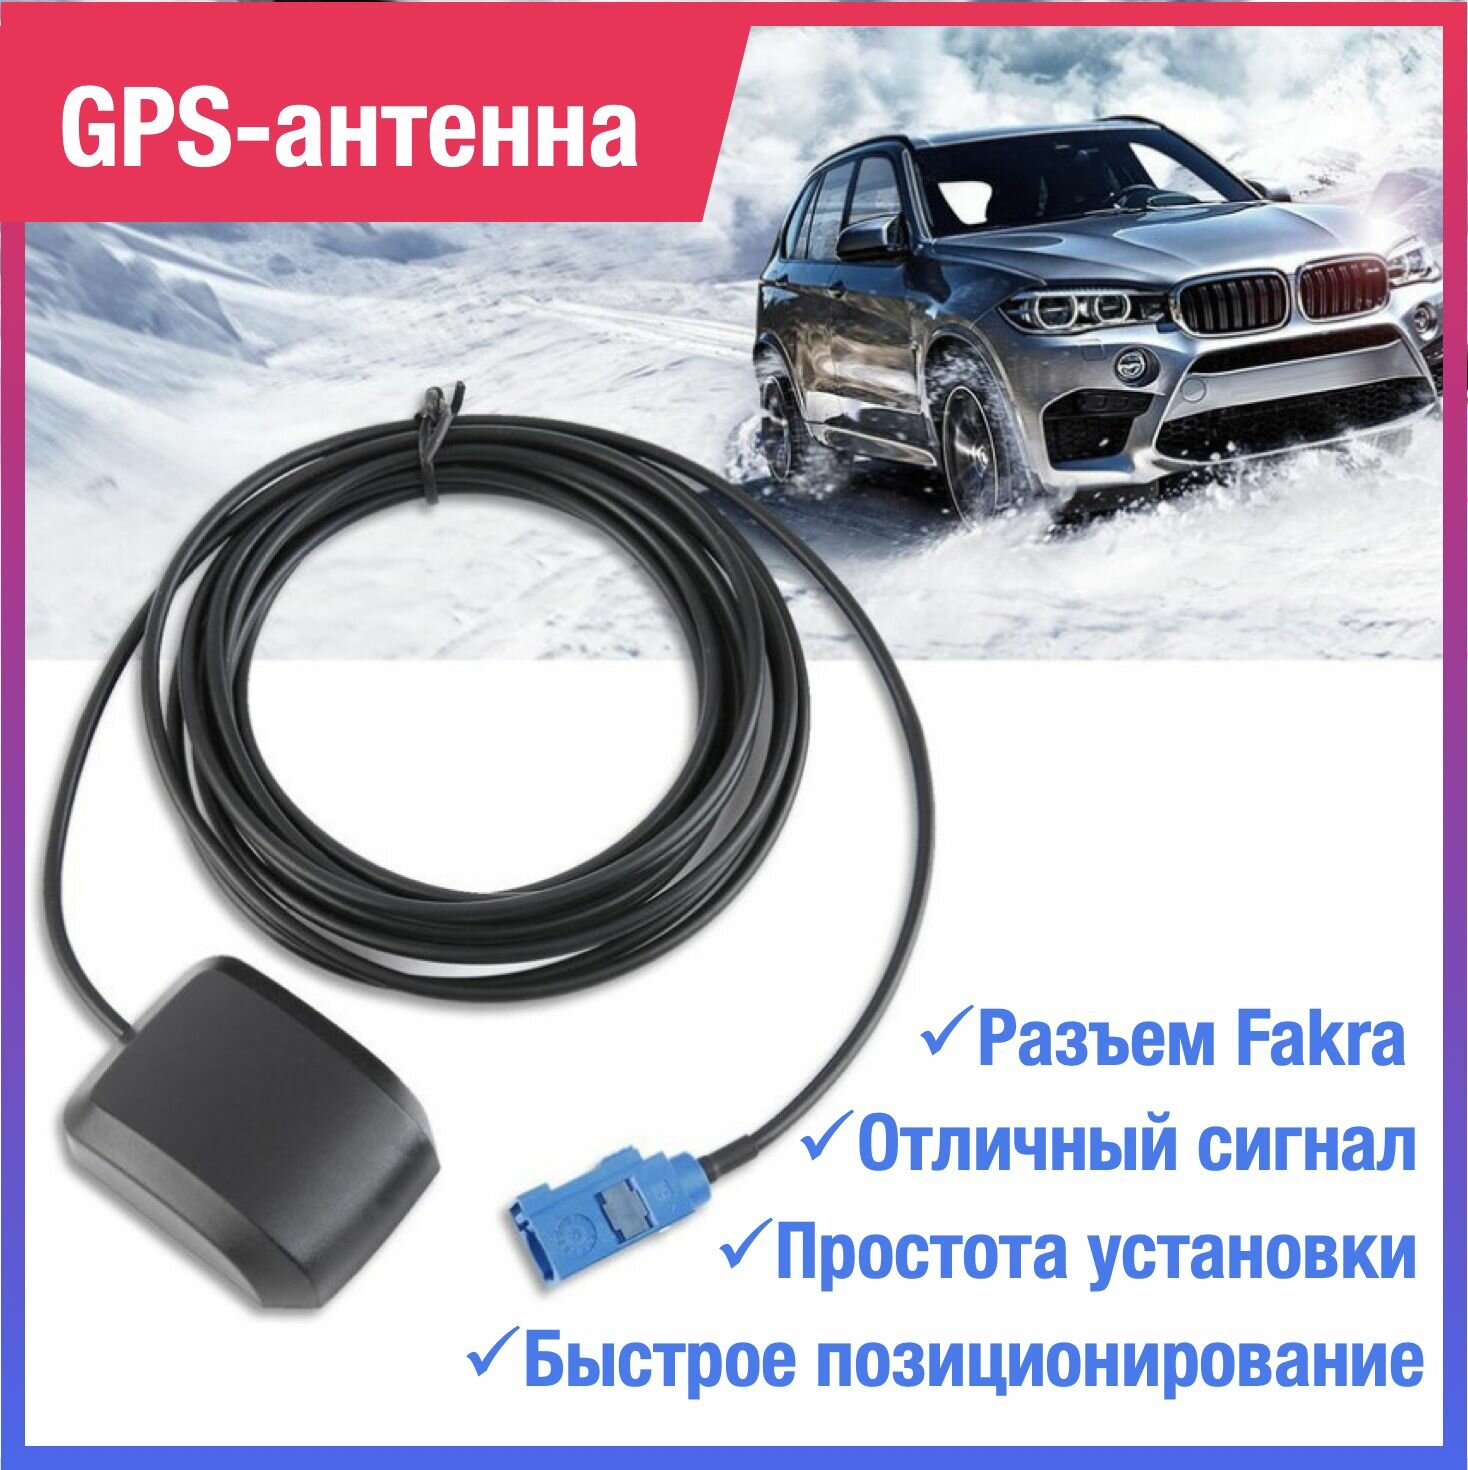 Антенна GPS Fakra, GPS-антенна Fakra для Volkswagen, Skoda, Audi, Kia, Hyundai, BMW, Mercedes и др.